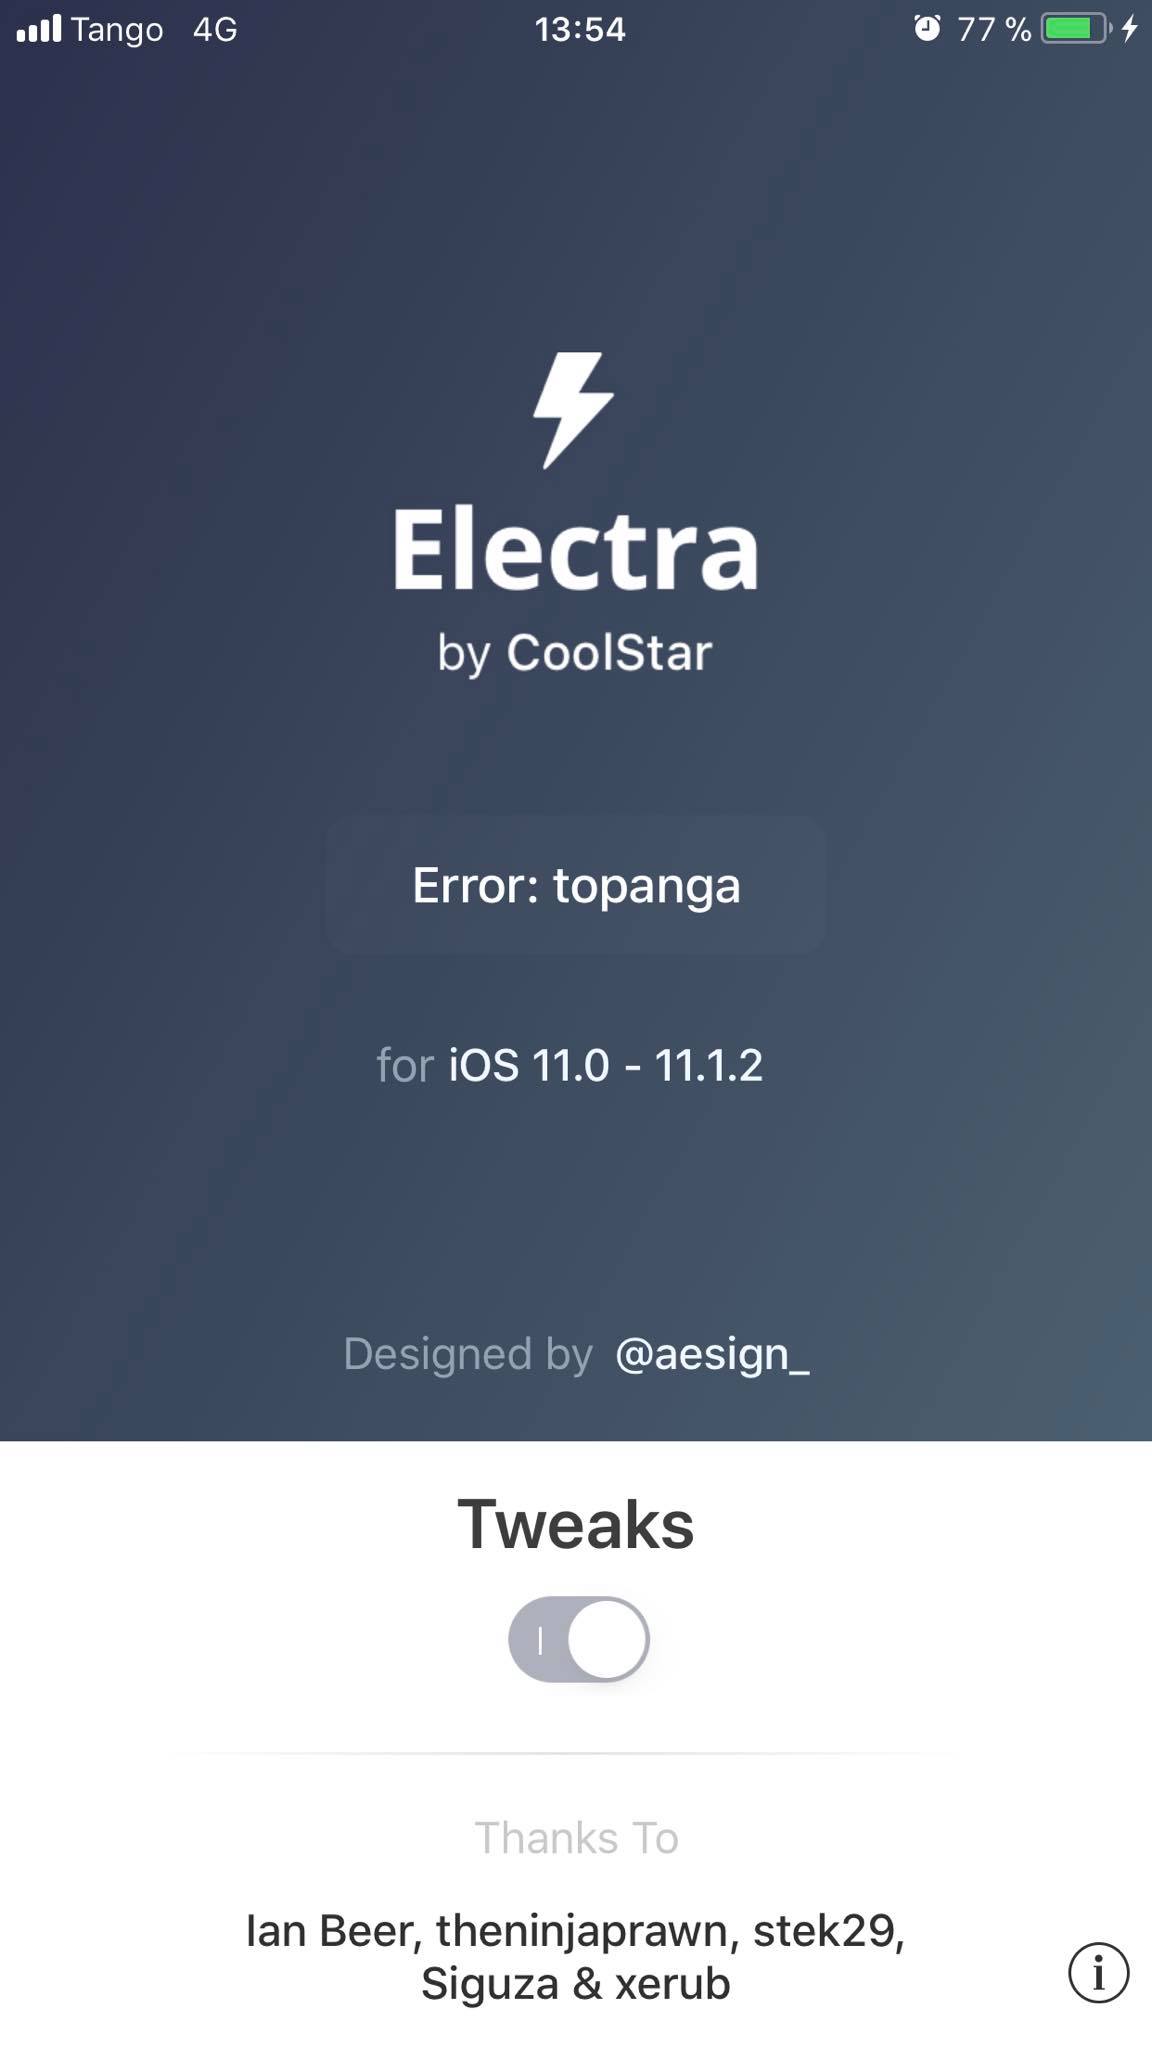 Topanga Bug in Electra, iOS 11, Jailbreak, Anleitung, Hilfe, Hack4Life, Fabian Geissler